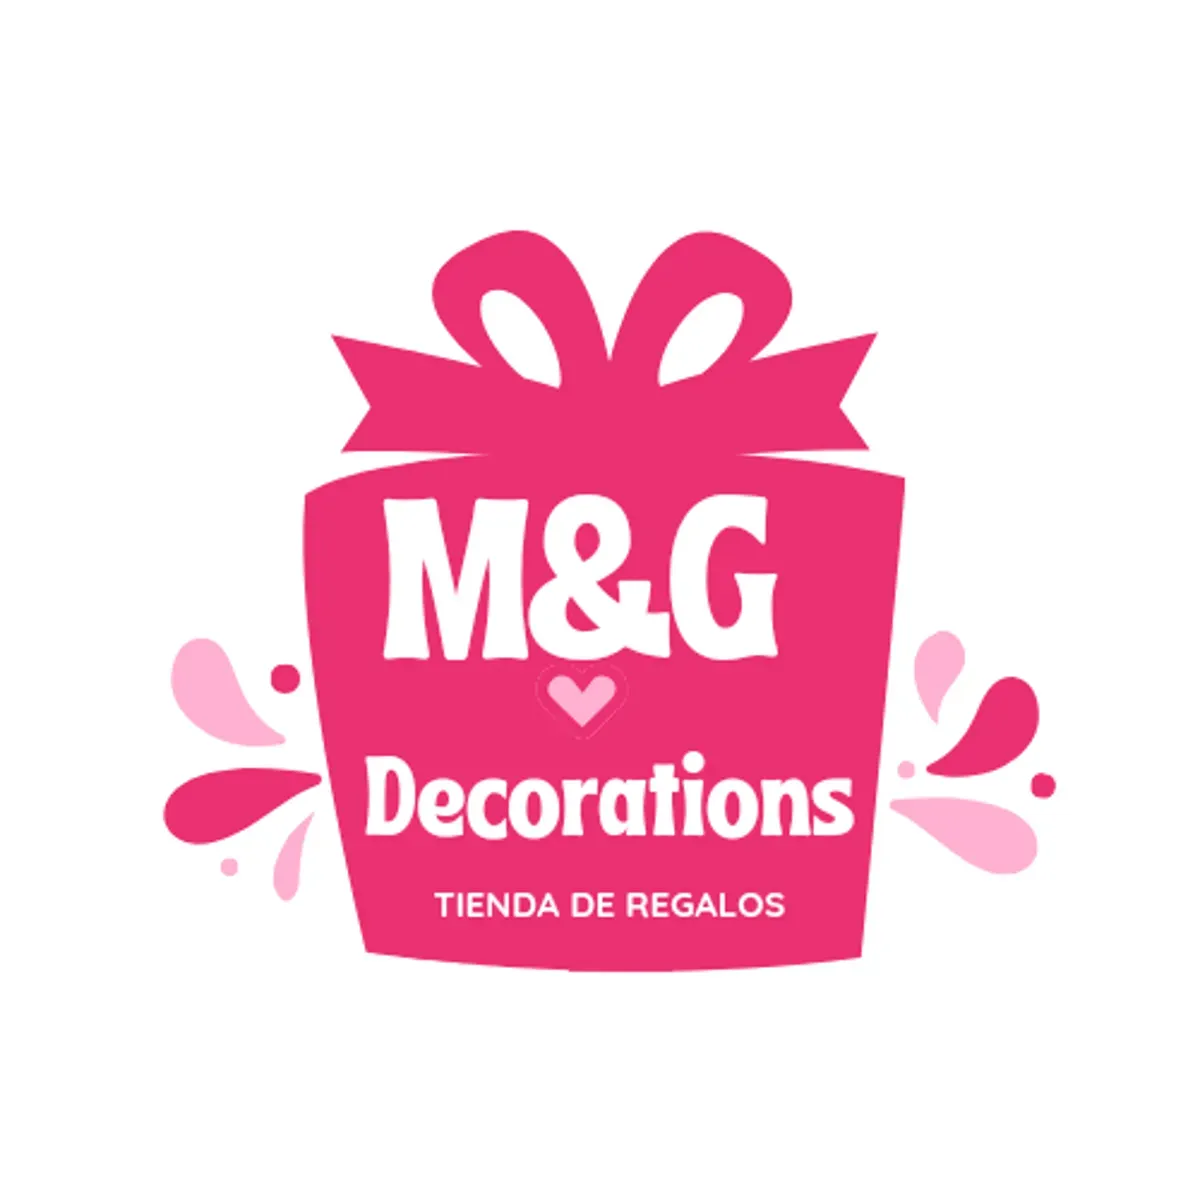 M&G Decorations